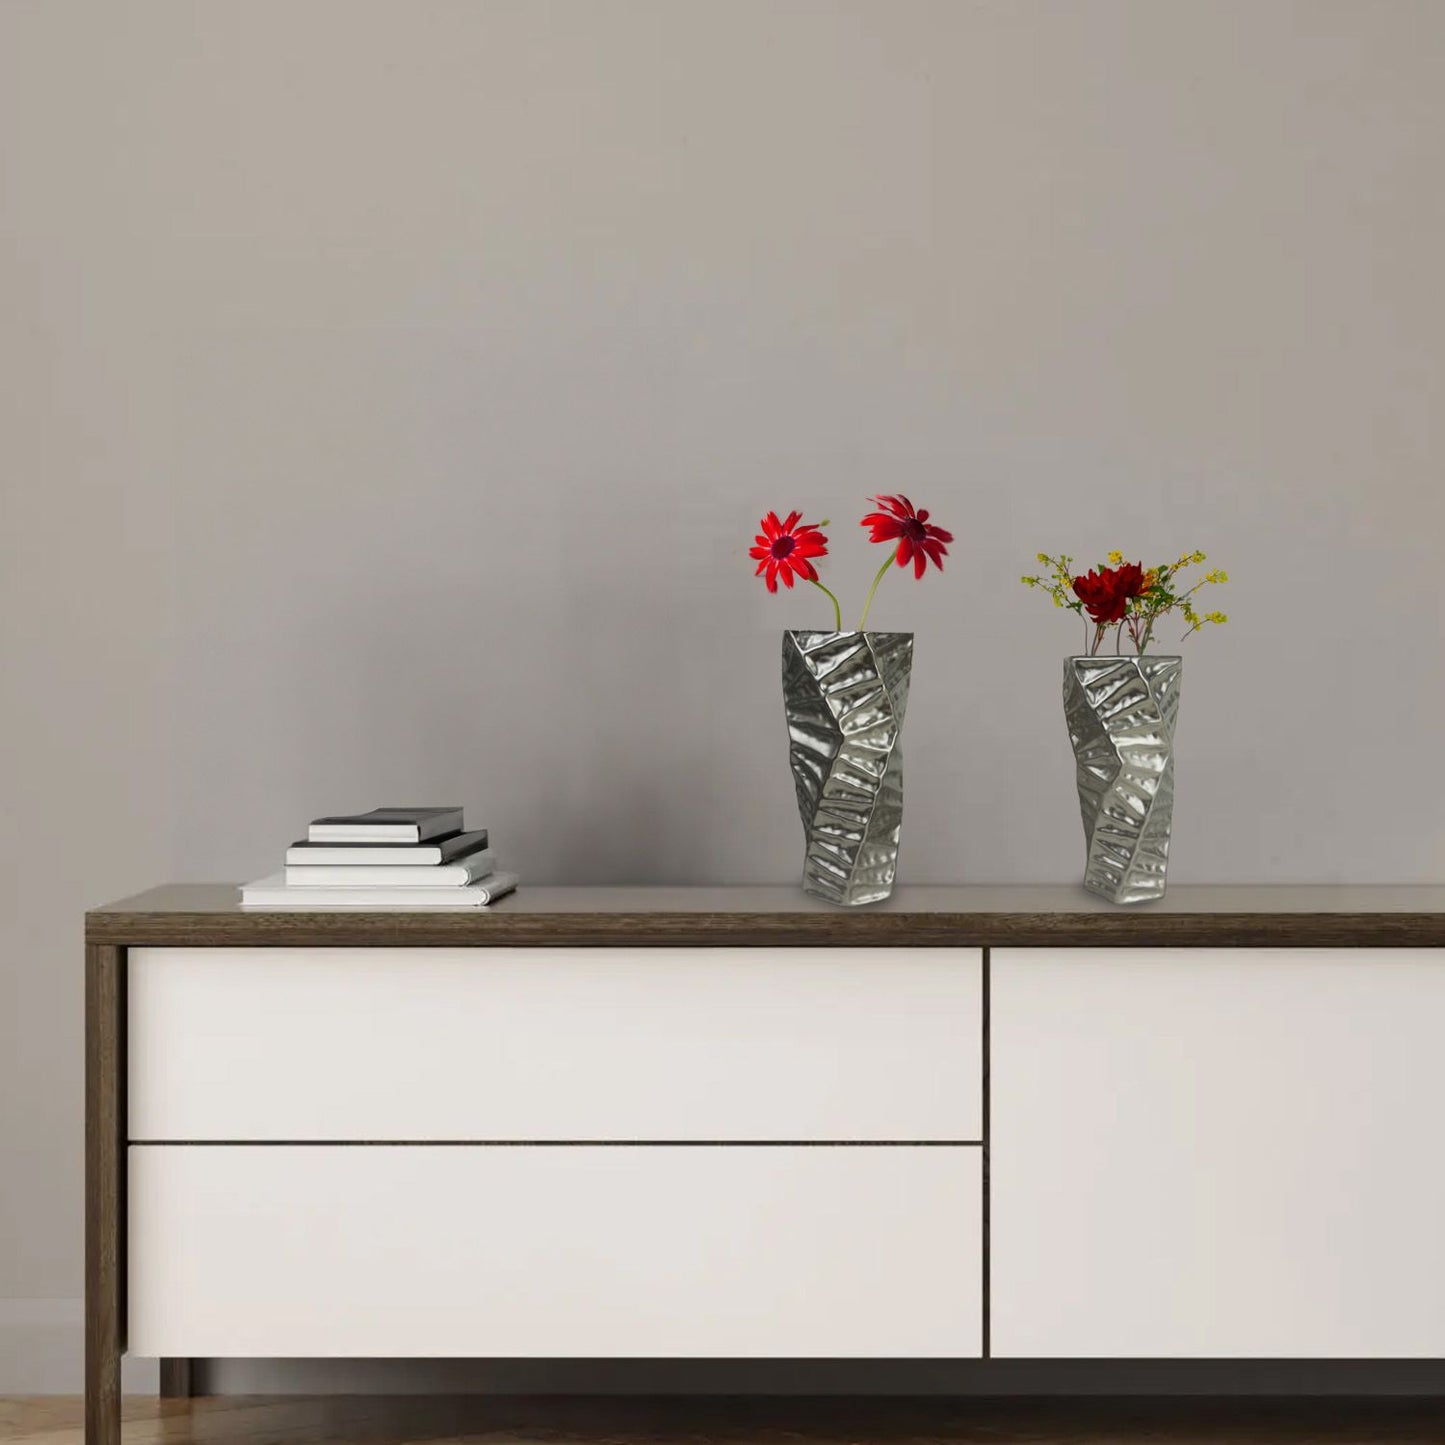 Vase-Set of 2-Silver-Home Decor-Home Accent-Modern-Contemporary-Sleek-Centerpiece-Gift